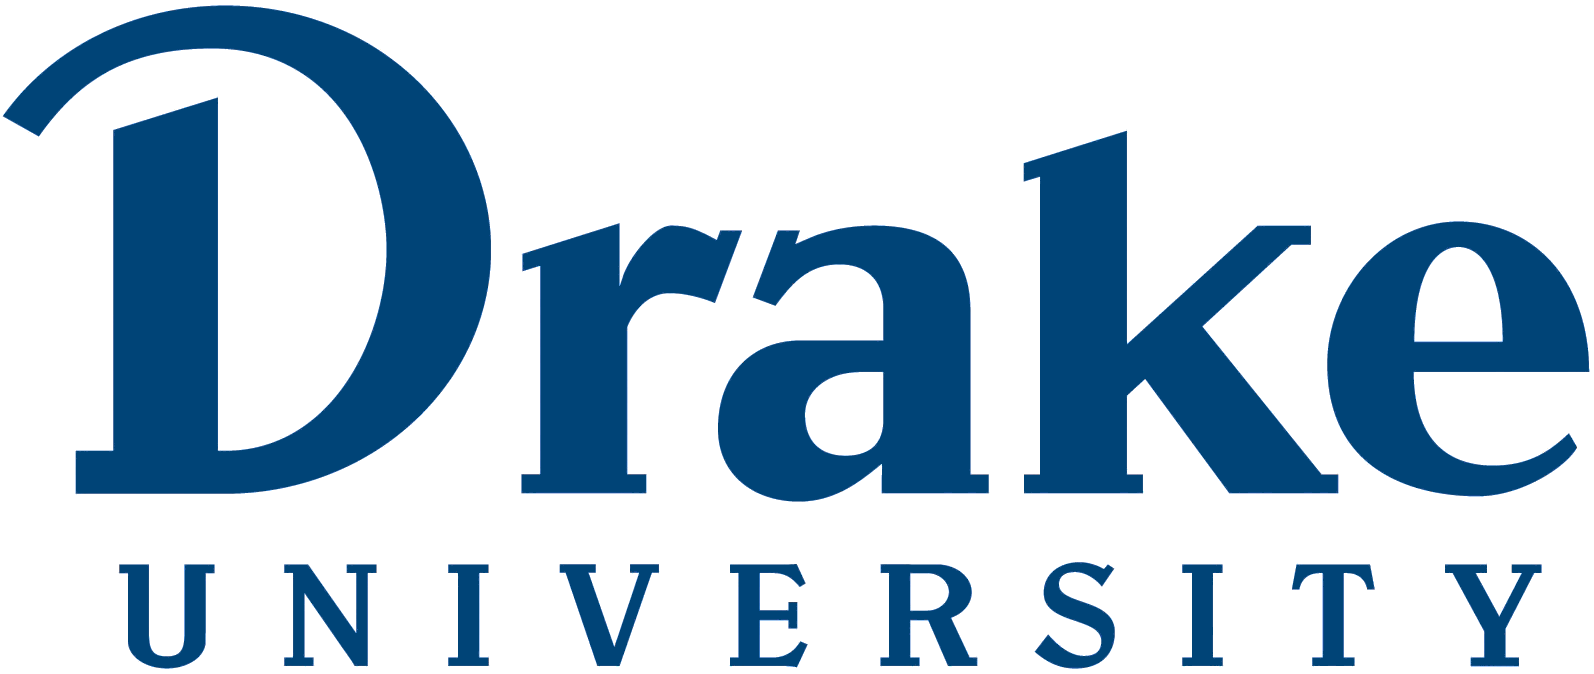 Drake University Logo - File:Drake University logo.png - Wikimedia Commons